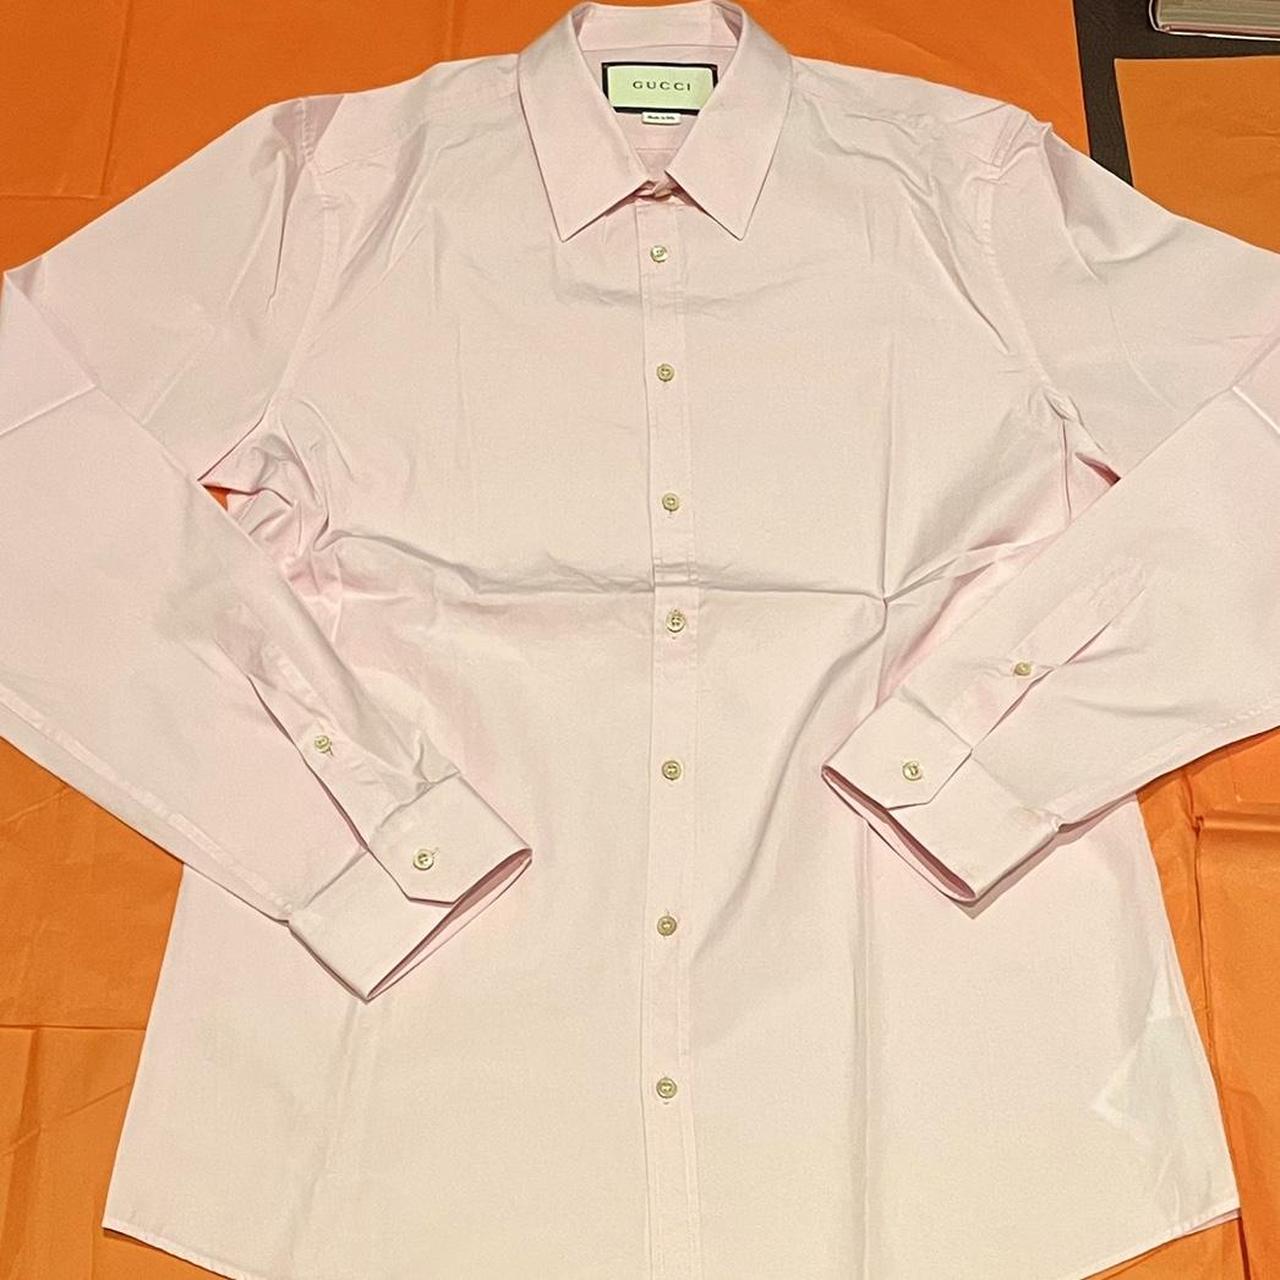 Gucci button up Shirt Regular fit 100% authentic... - Depop